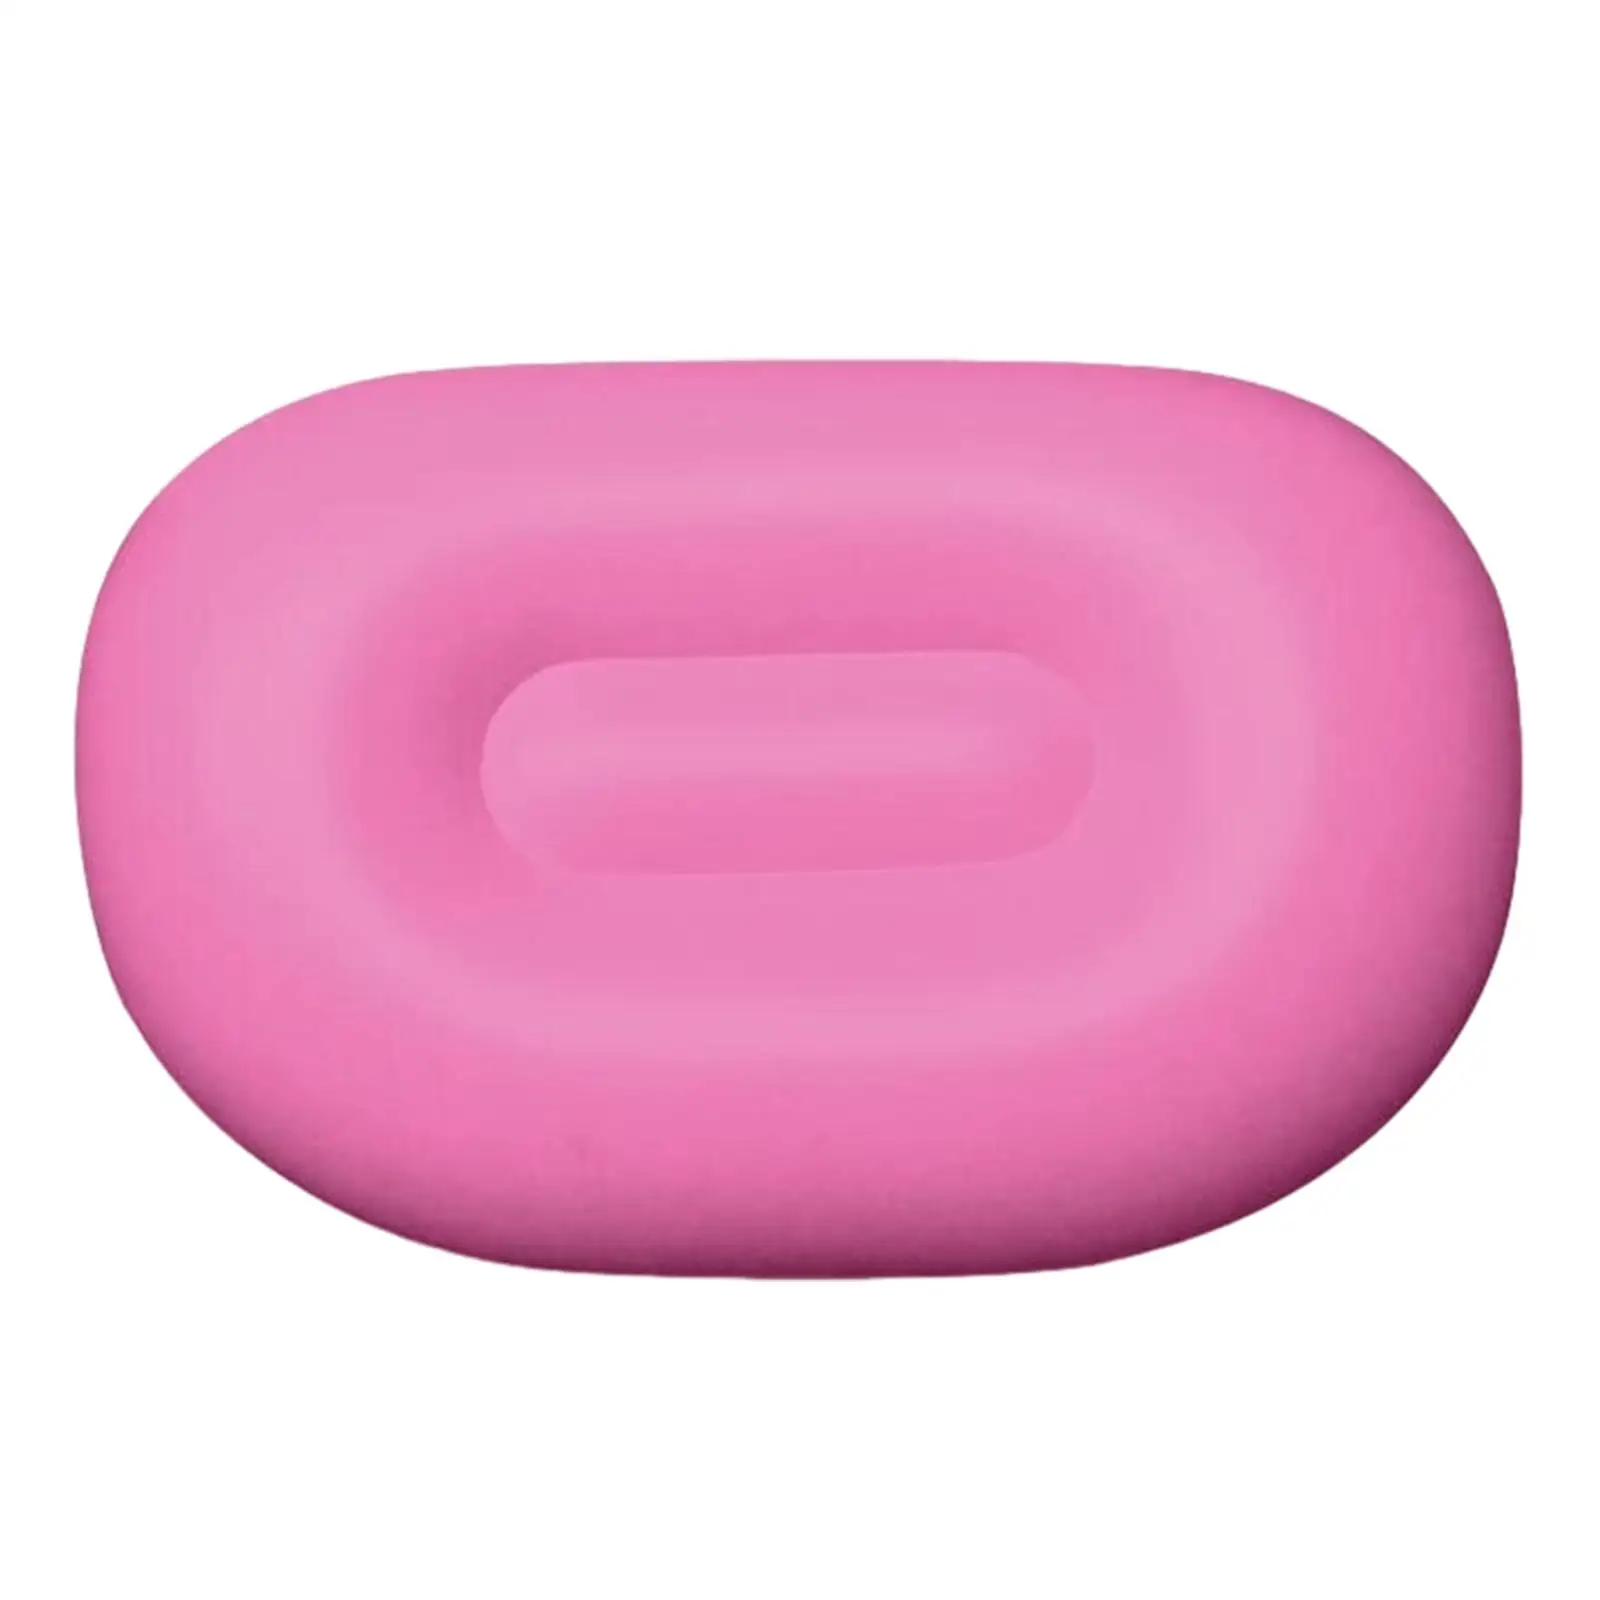 Bathtub Seat Cushion Inflatable Reusable Bath Accessories Washable Soft Portable Bathtub Pillow for Bathroom Warm Tub Pool SPA